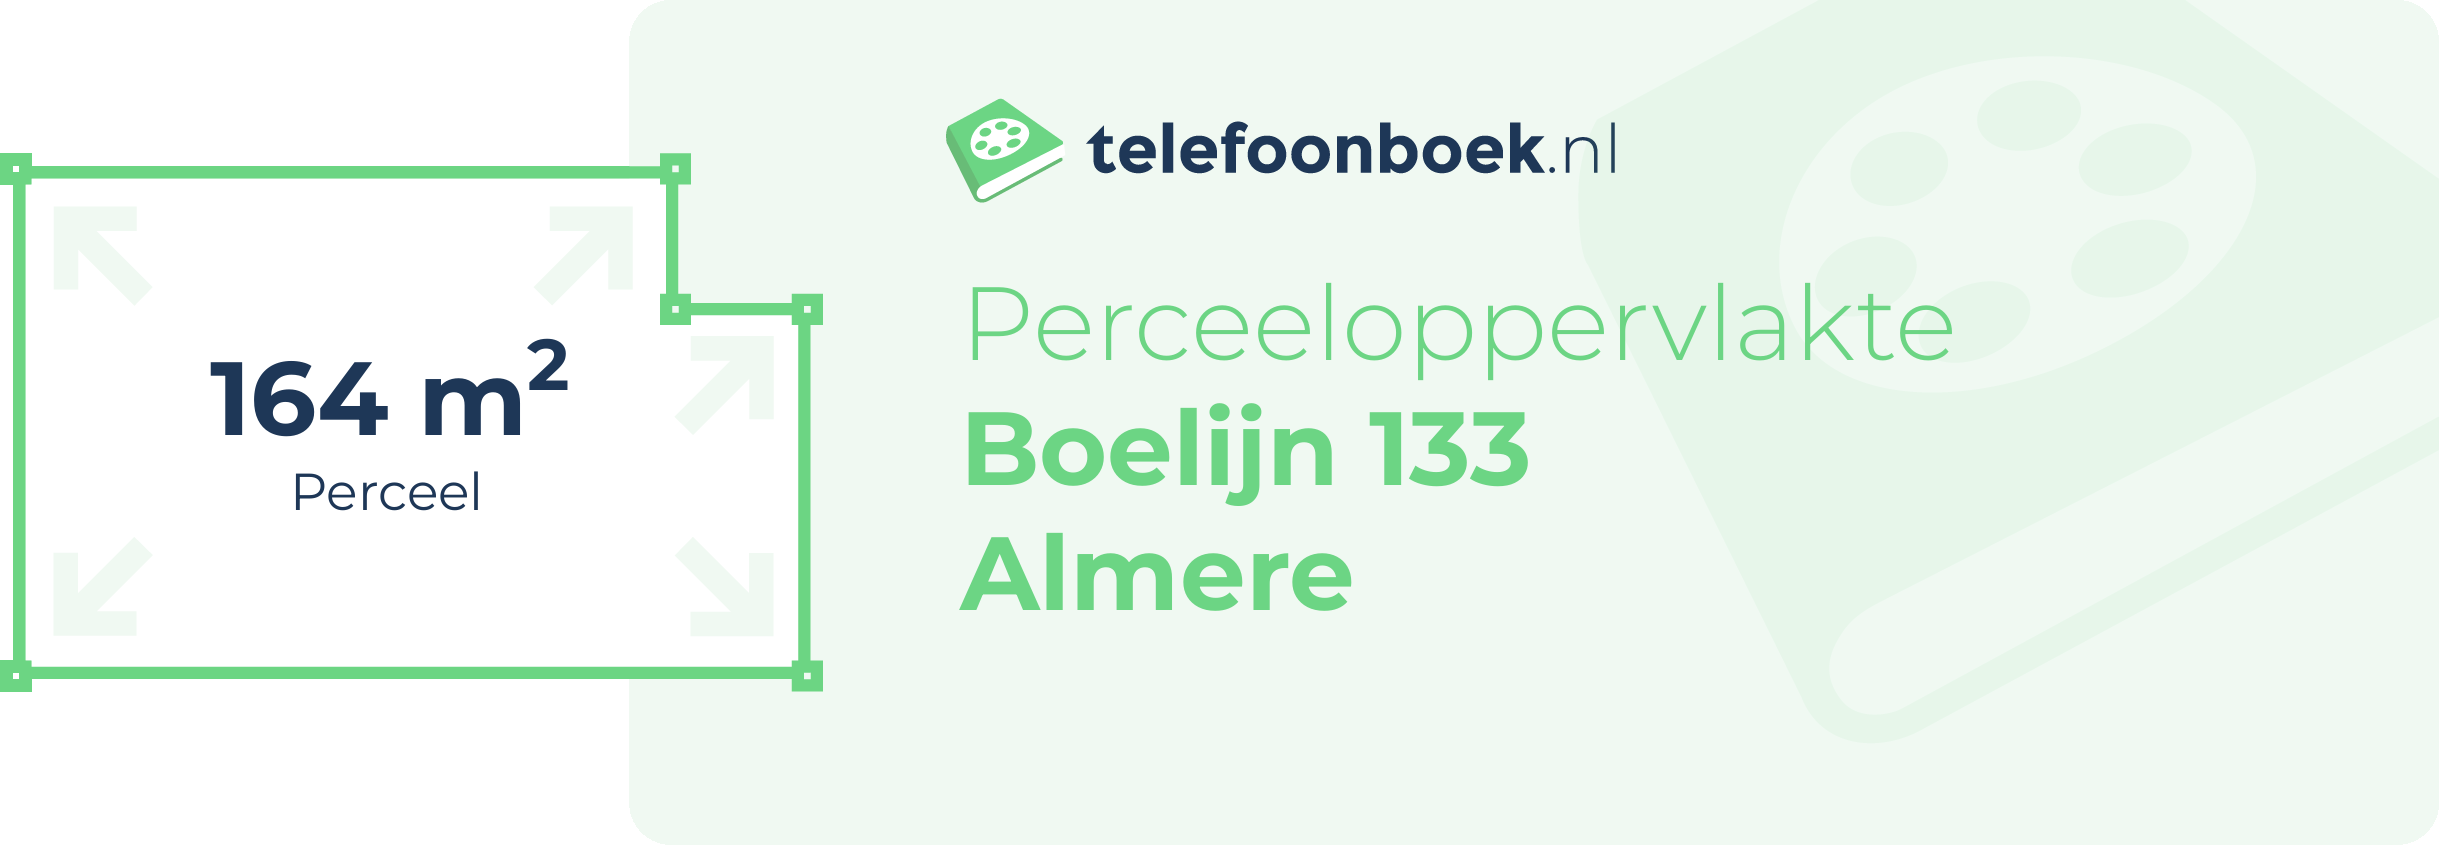 Perceeloppervlakte Boelijn 133 Almere